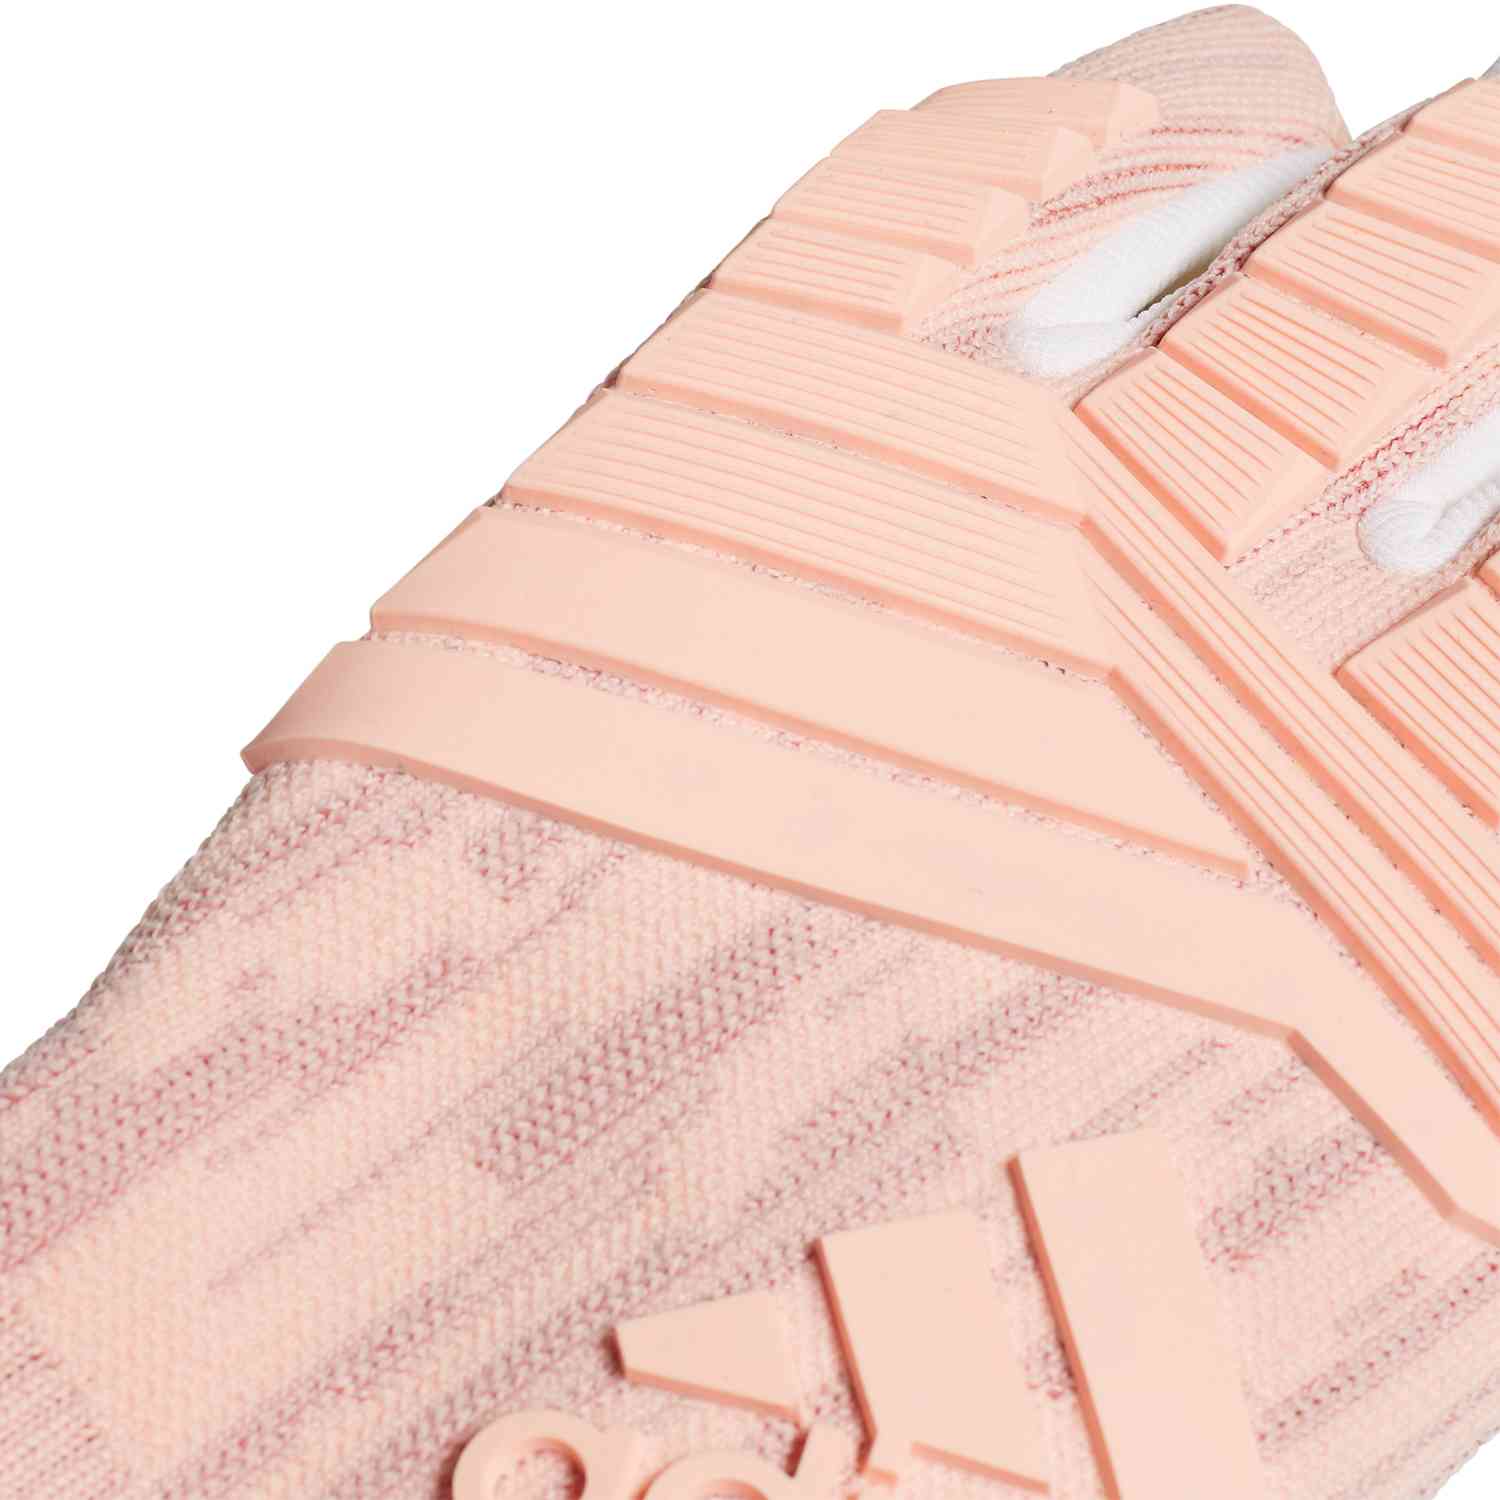 pink adidas gloves